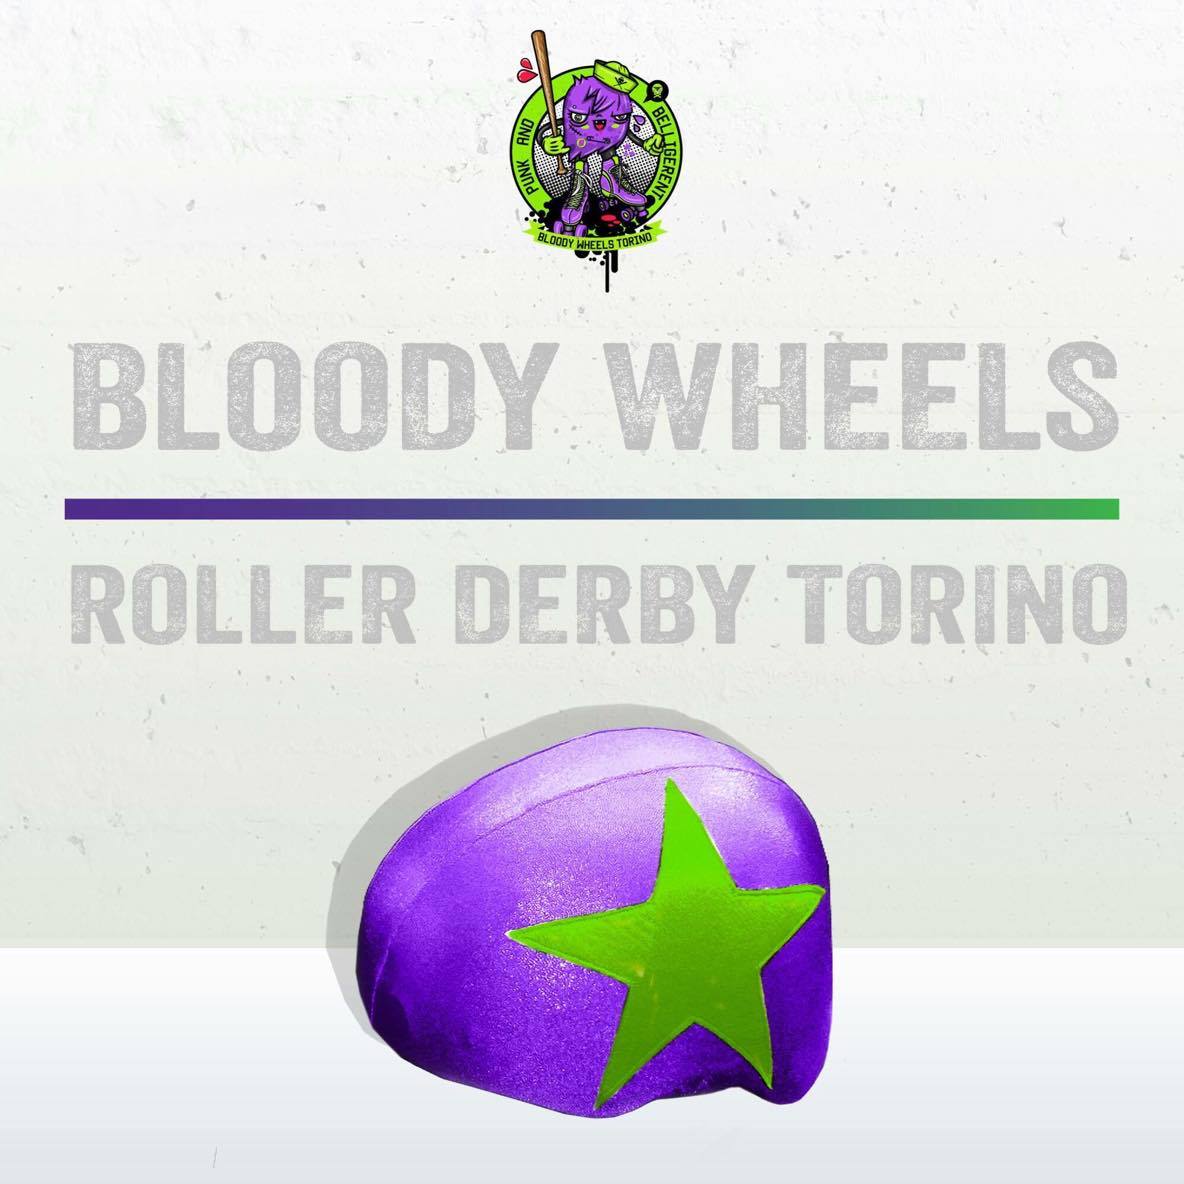 Blood Drive by Bloody Wheels Roller Derby Torino